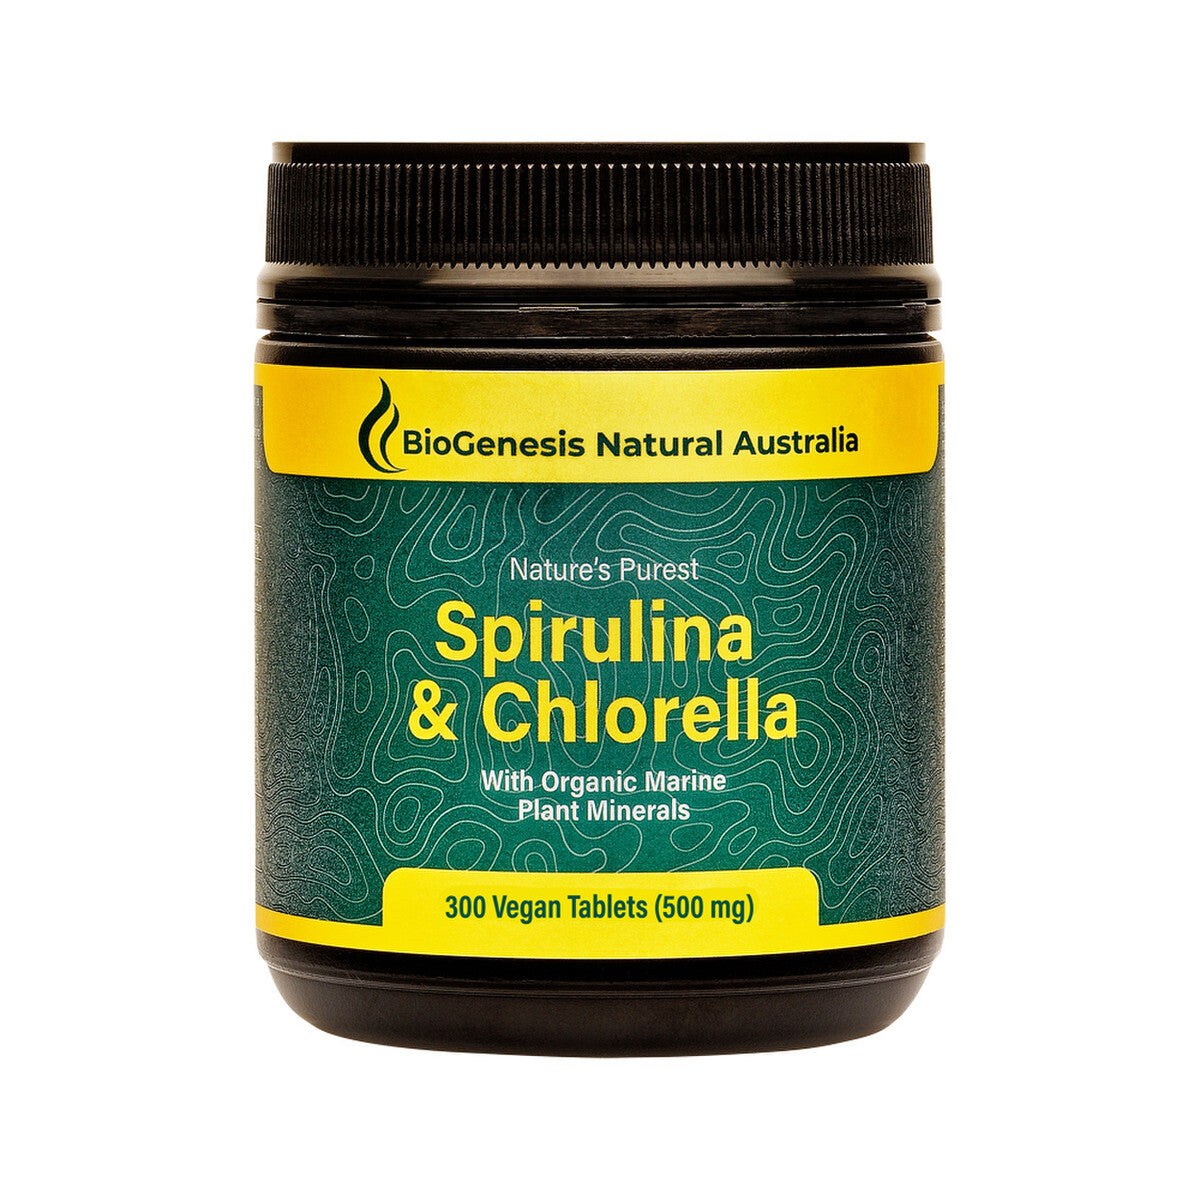 BioGenesis Natural Australia Spirulina & Chlorella with Organic Marine Plant Minerals 500mg 300 Tablets